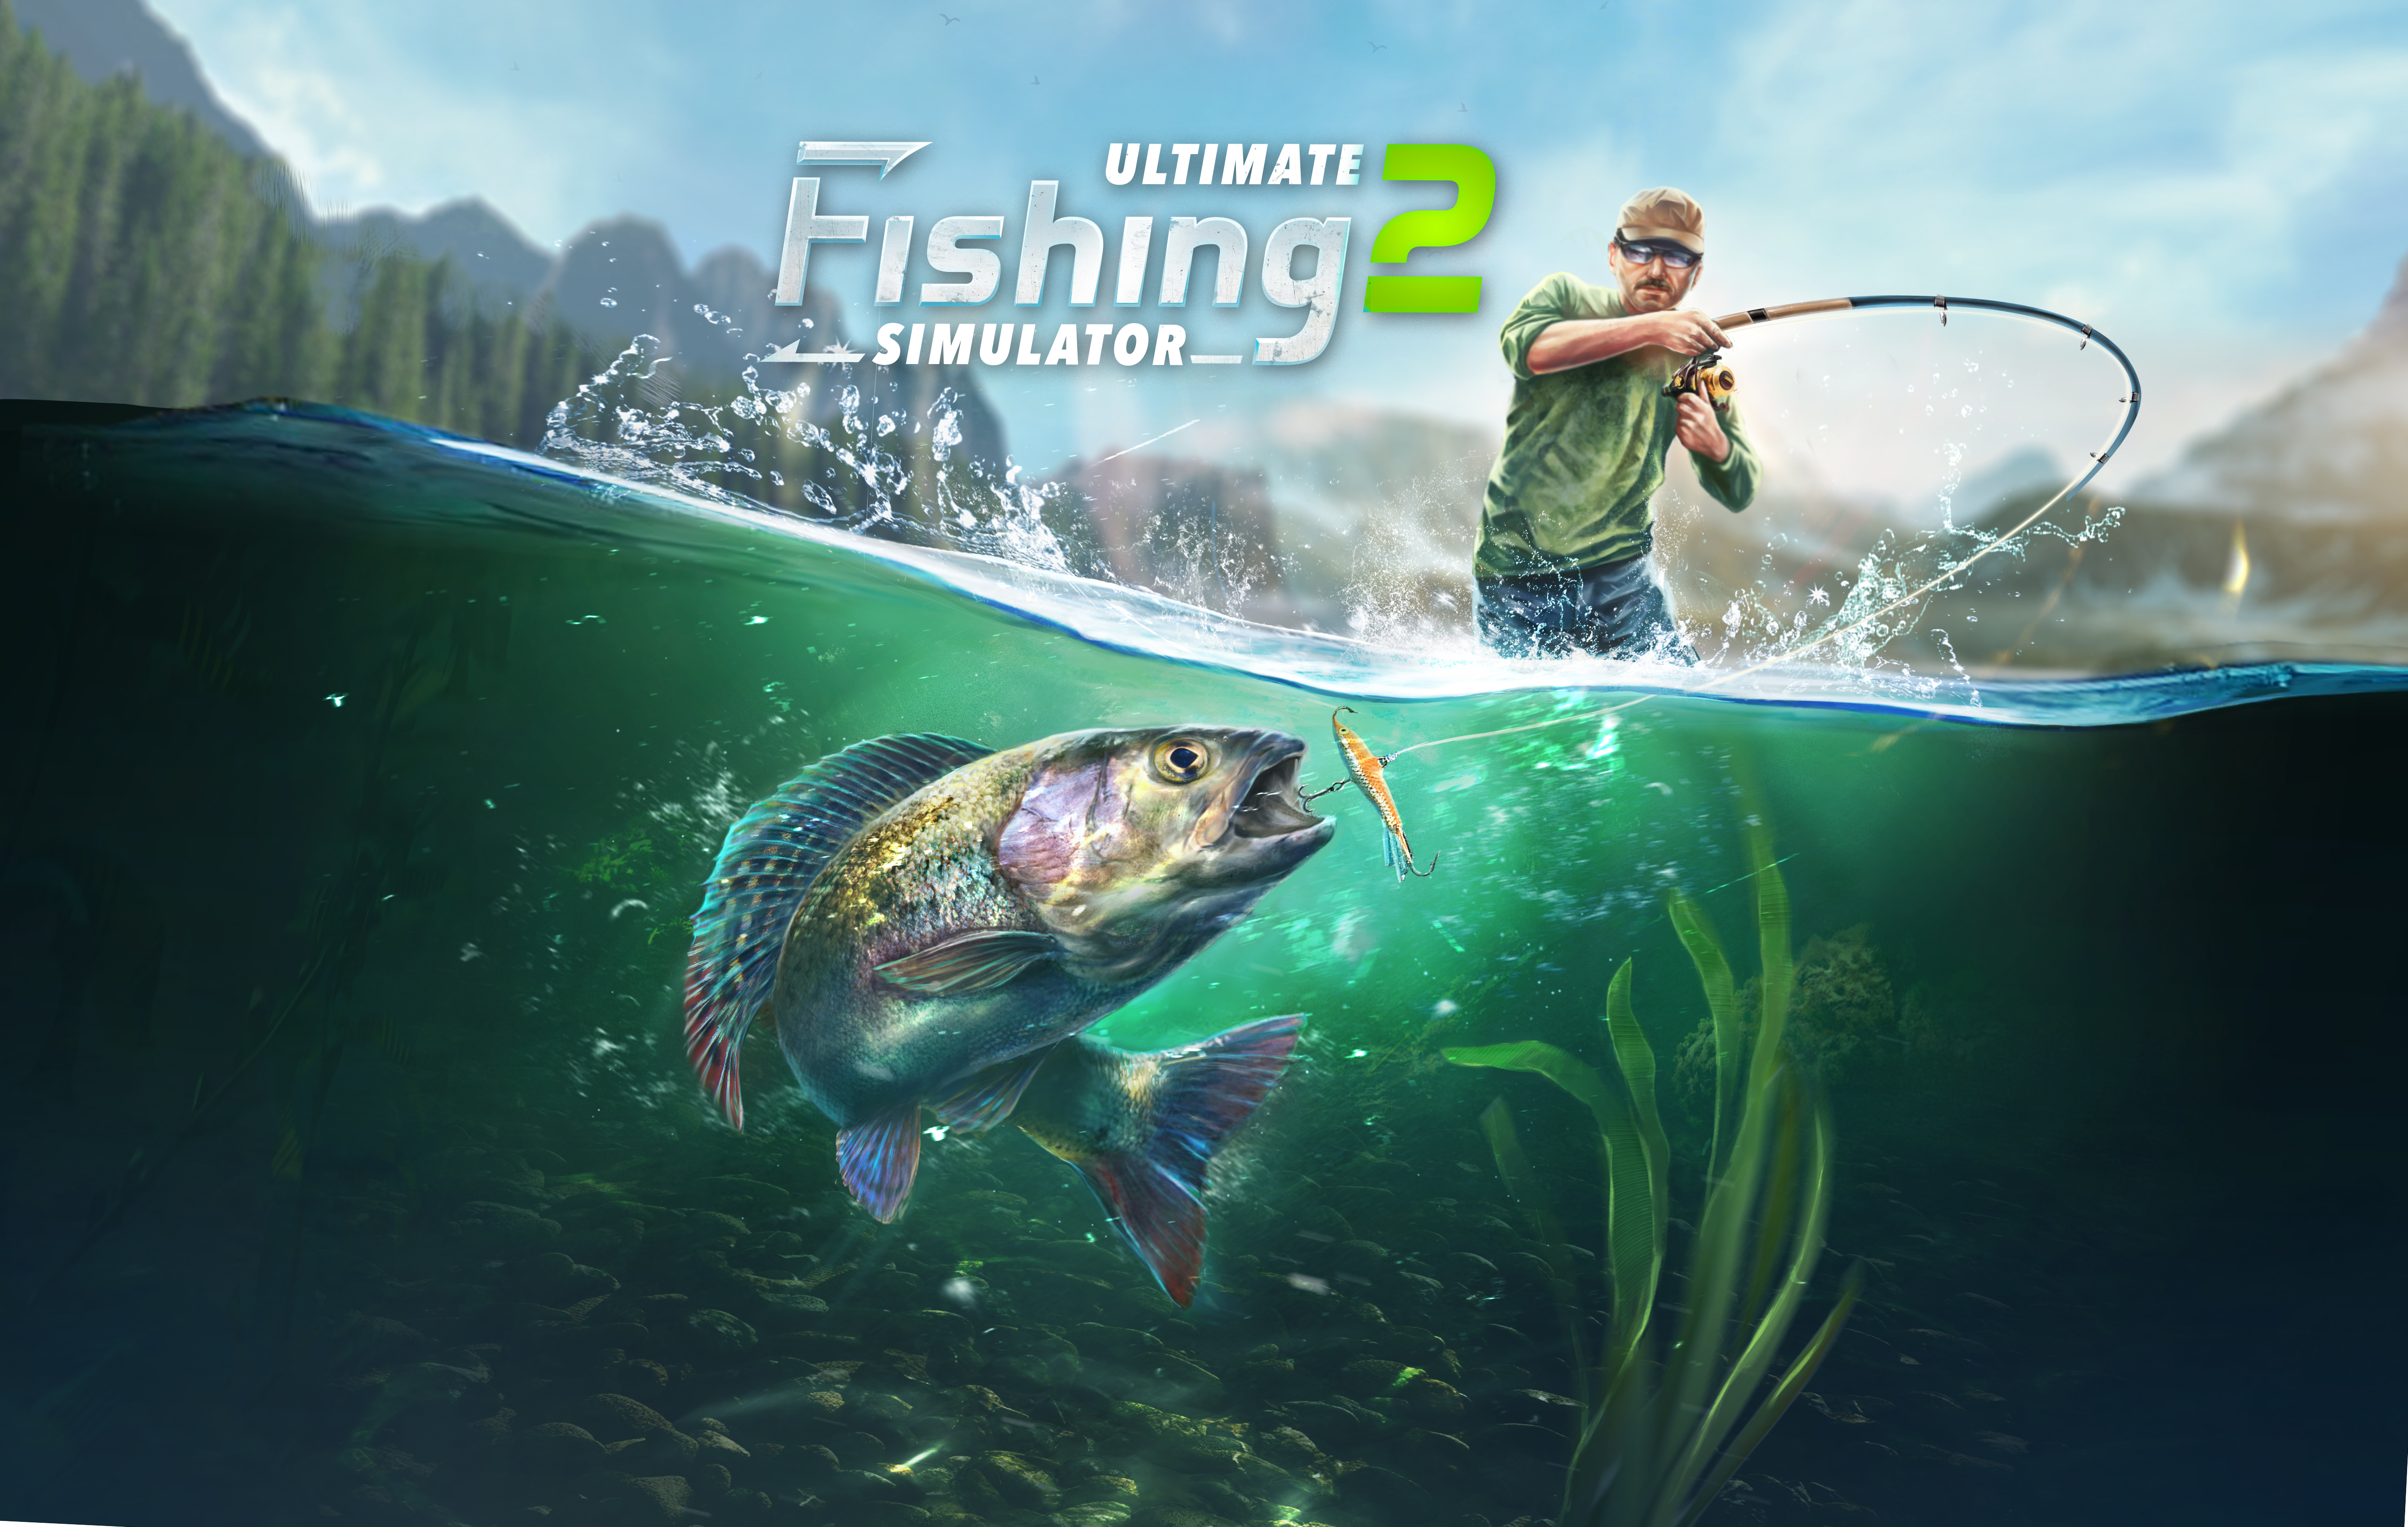 Ultimate Fishing Simulator 2 - PLAYTEST Version #2: New Residence